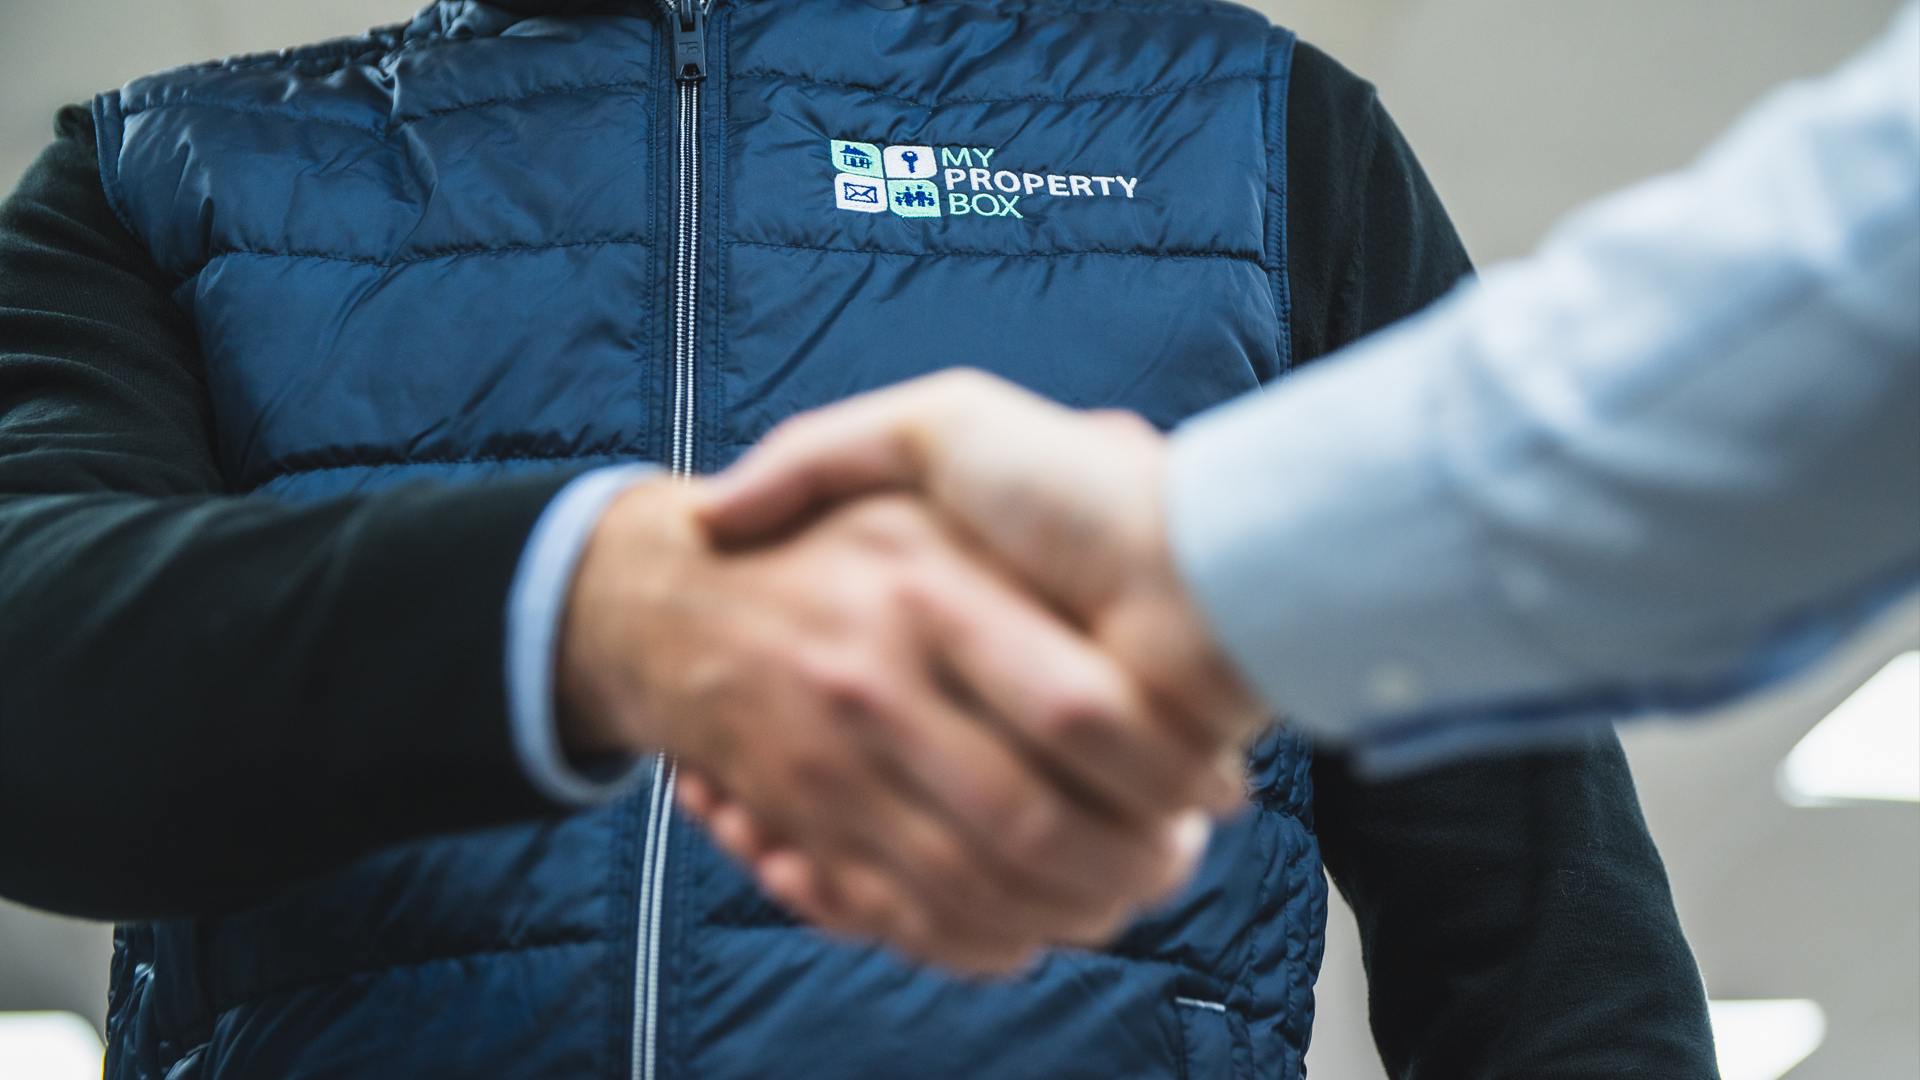 MPB handshake with customer